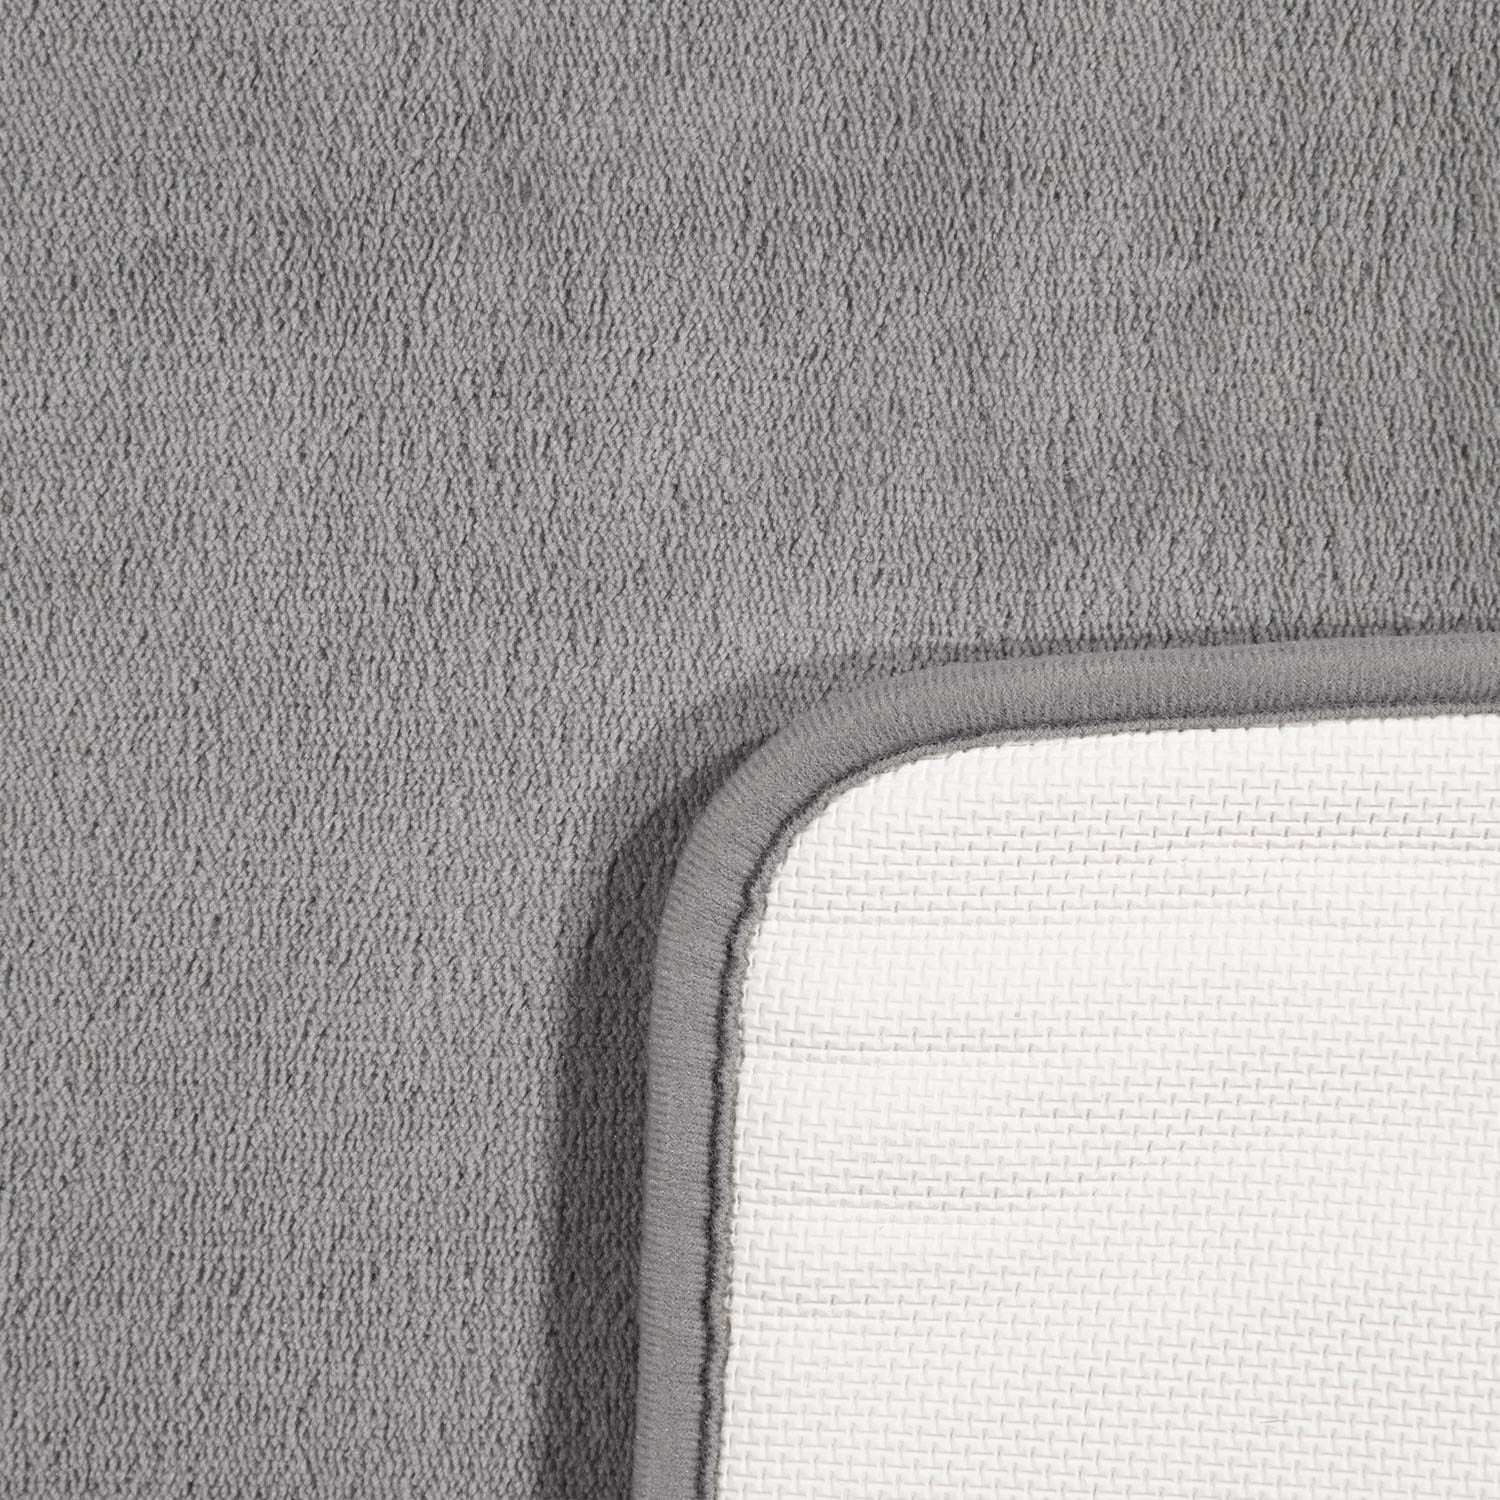 Paco Home Badematte »Corby 255«, Höhe 13 mm, rutschhemmend beschichtet, fussbodenheizungsgeeignet, Badteppich, Uni Farben, Memory-Foam Effekt